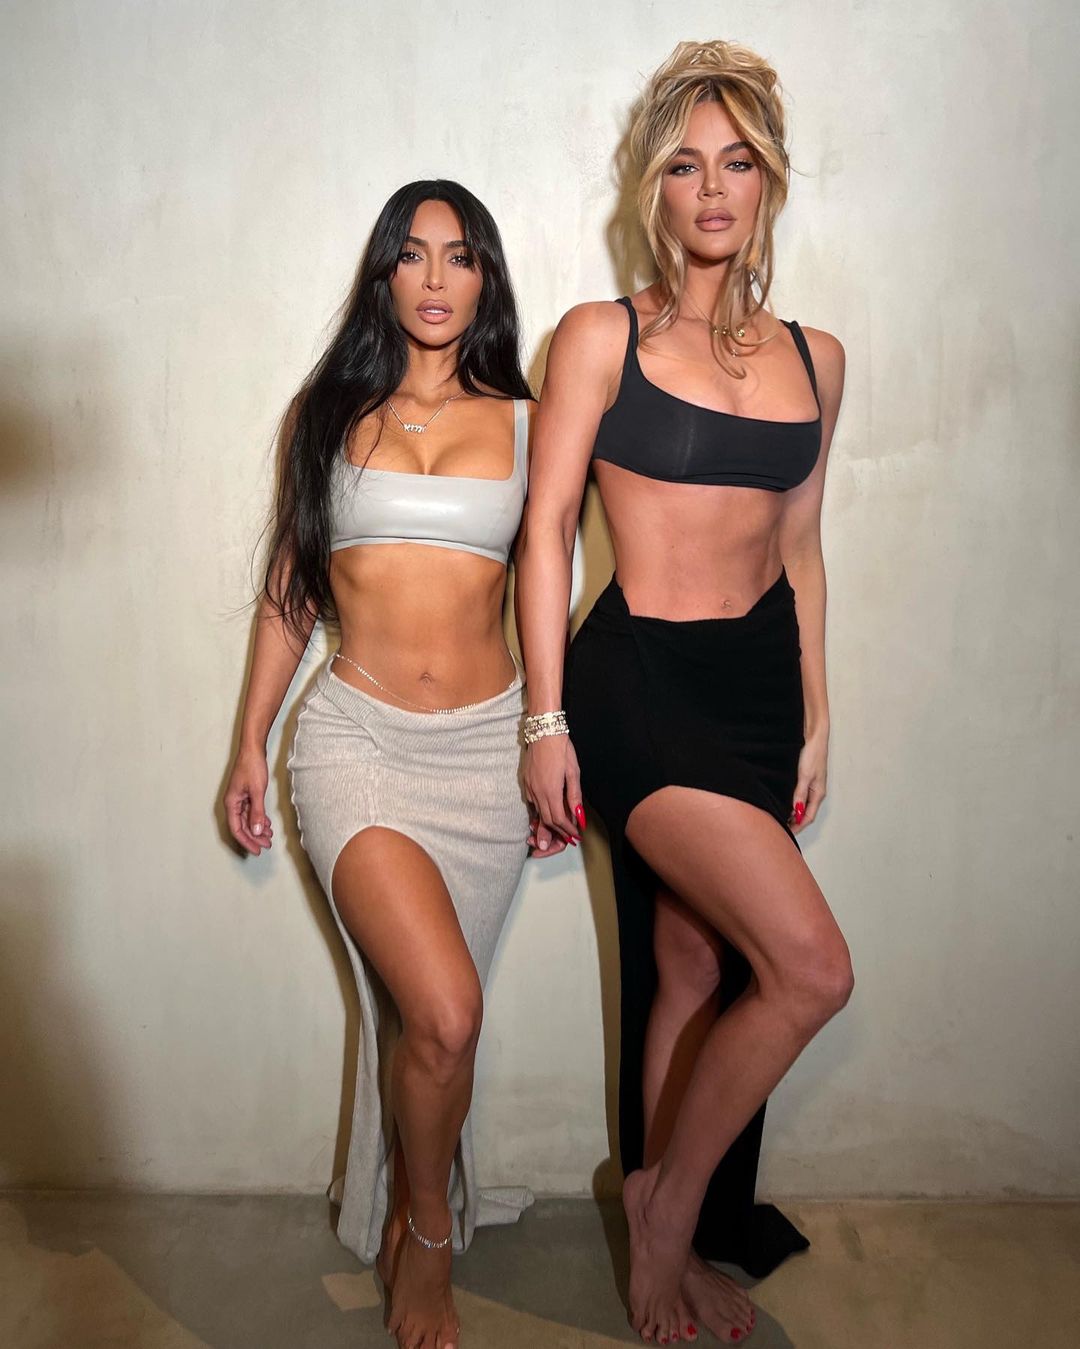 Khloe and Kim Kardashian poses in Black and Silver Split Dress During Photoshoot, Feb 2023